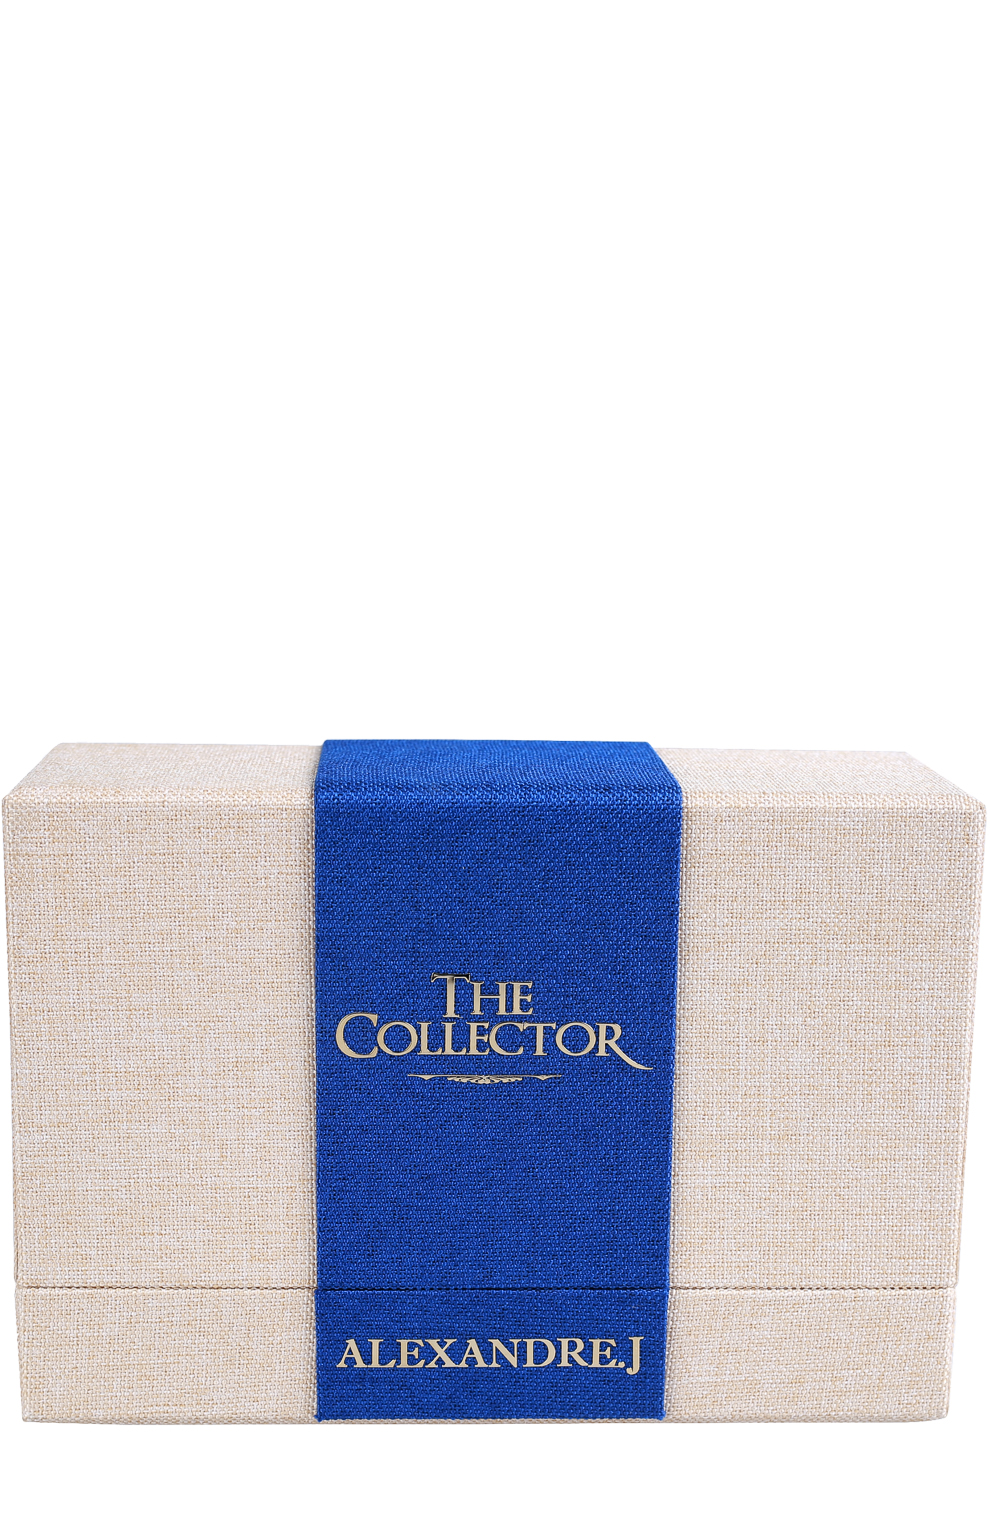 Alexandre J. The Collector Set №2